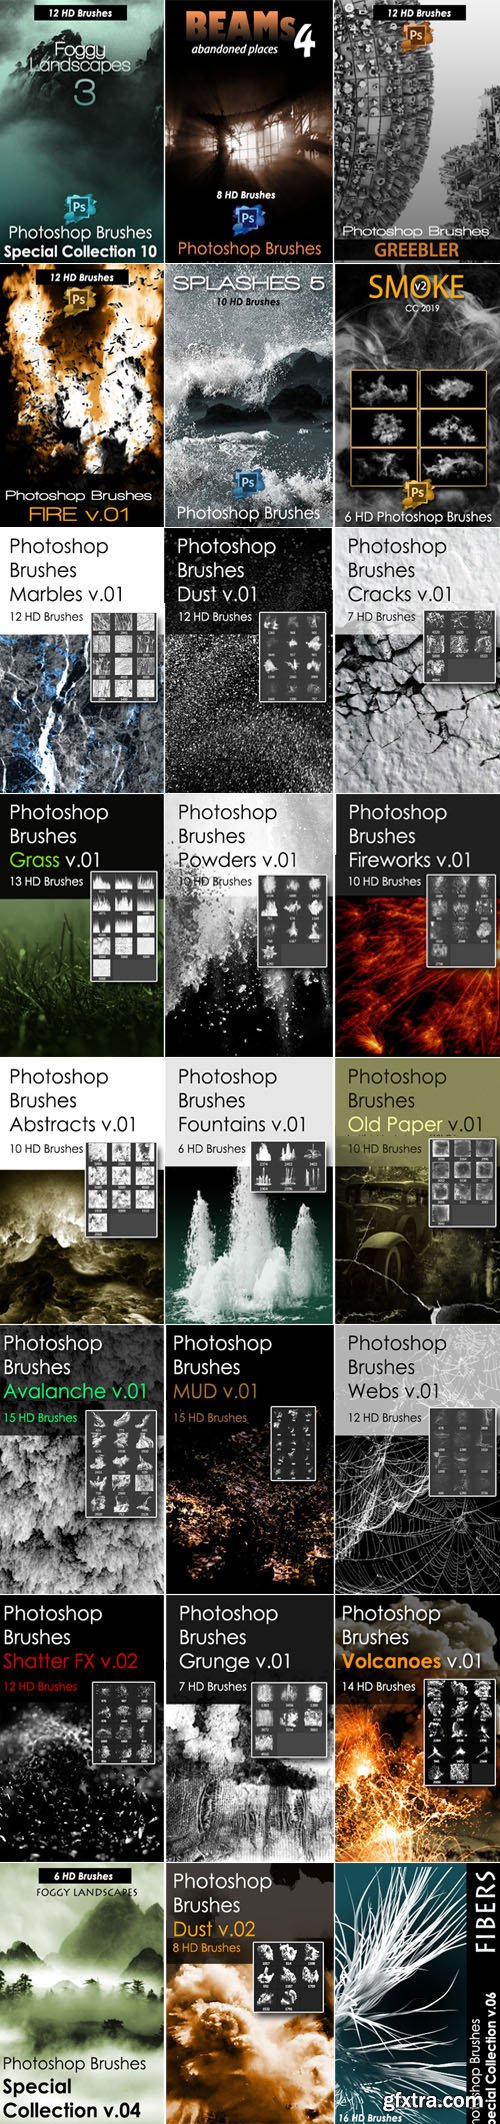 photoshop creative collection vol. 12